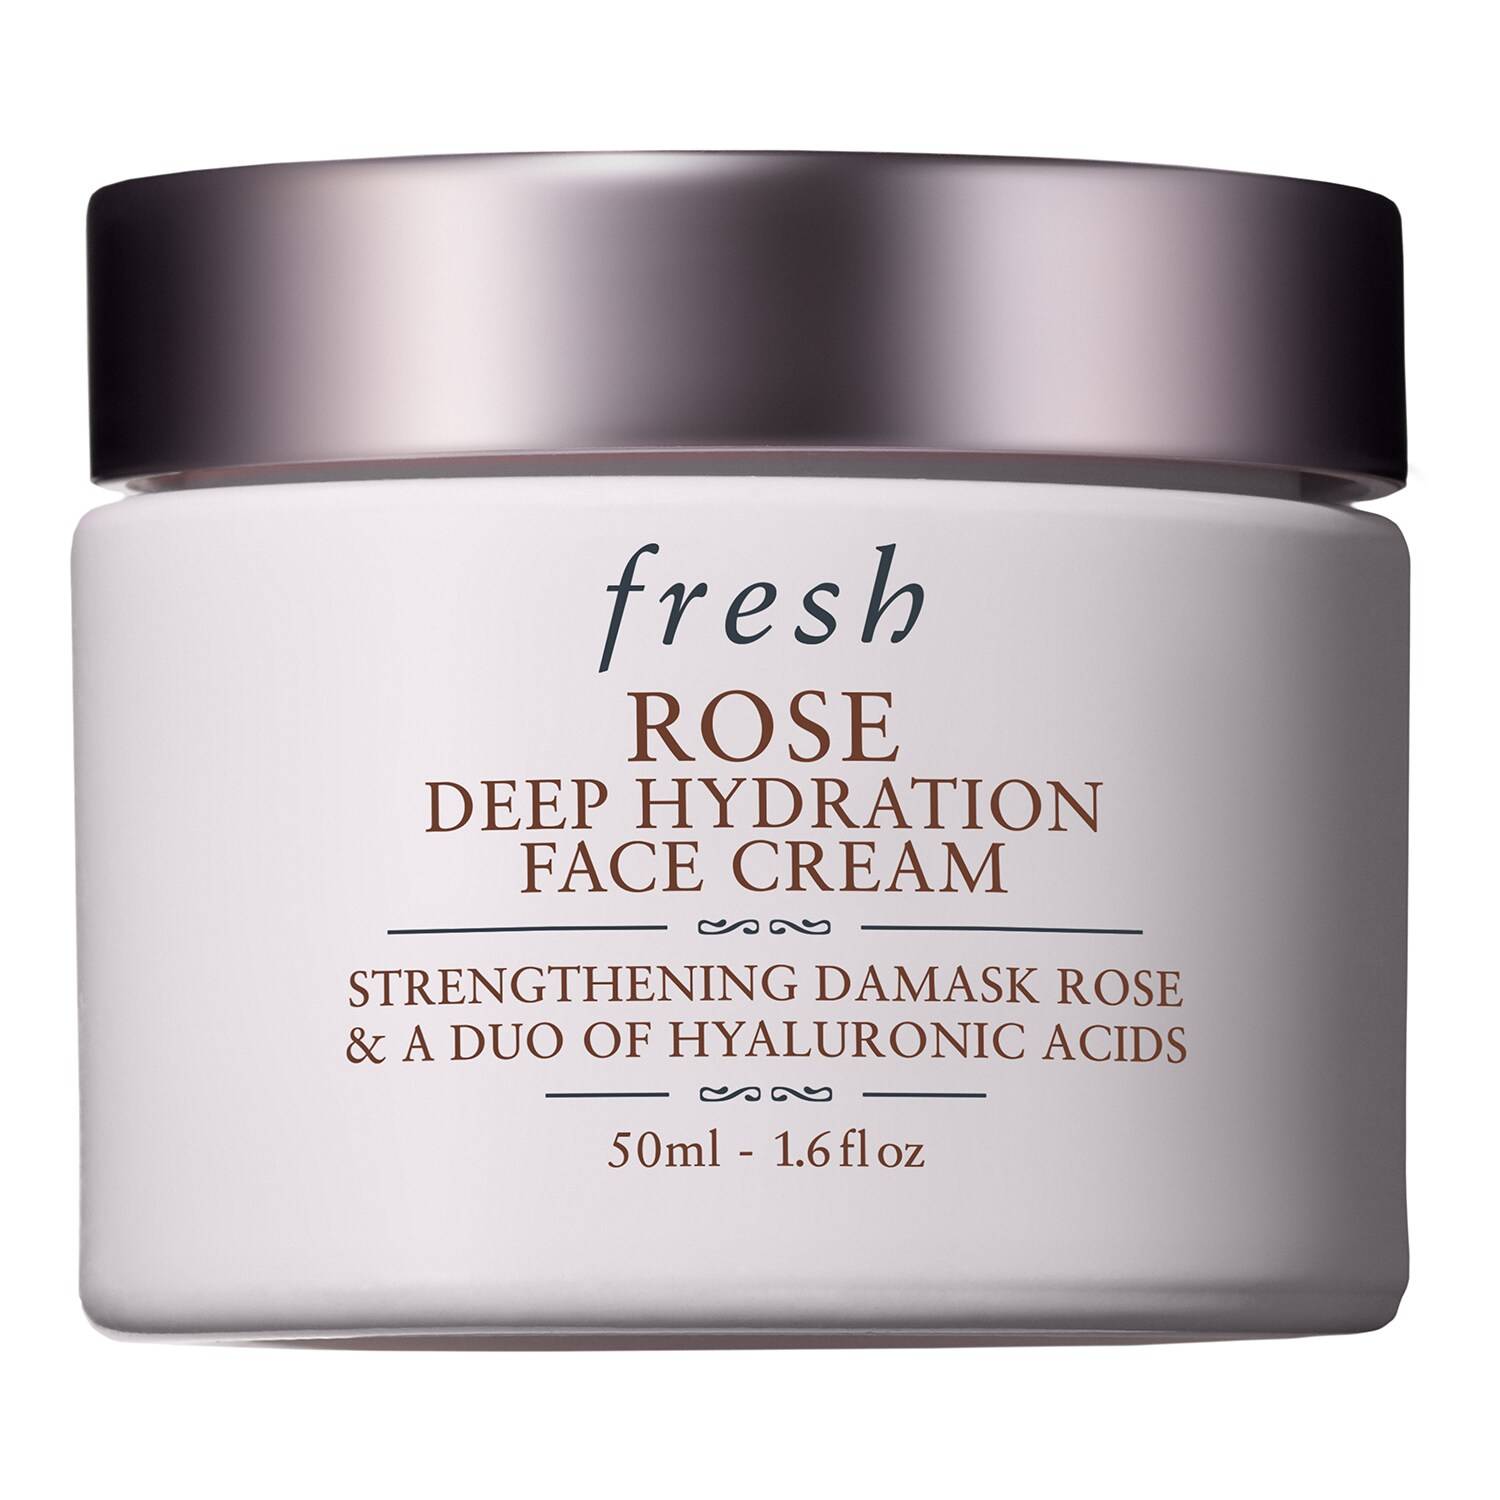 Fresh Rose Deep Hydration Face Cream Ml Sephora Uk